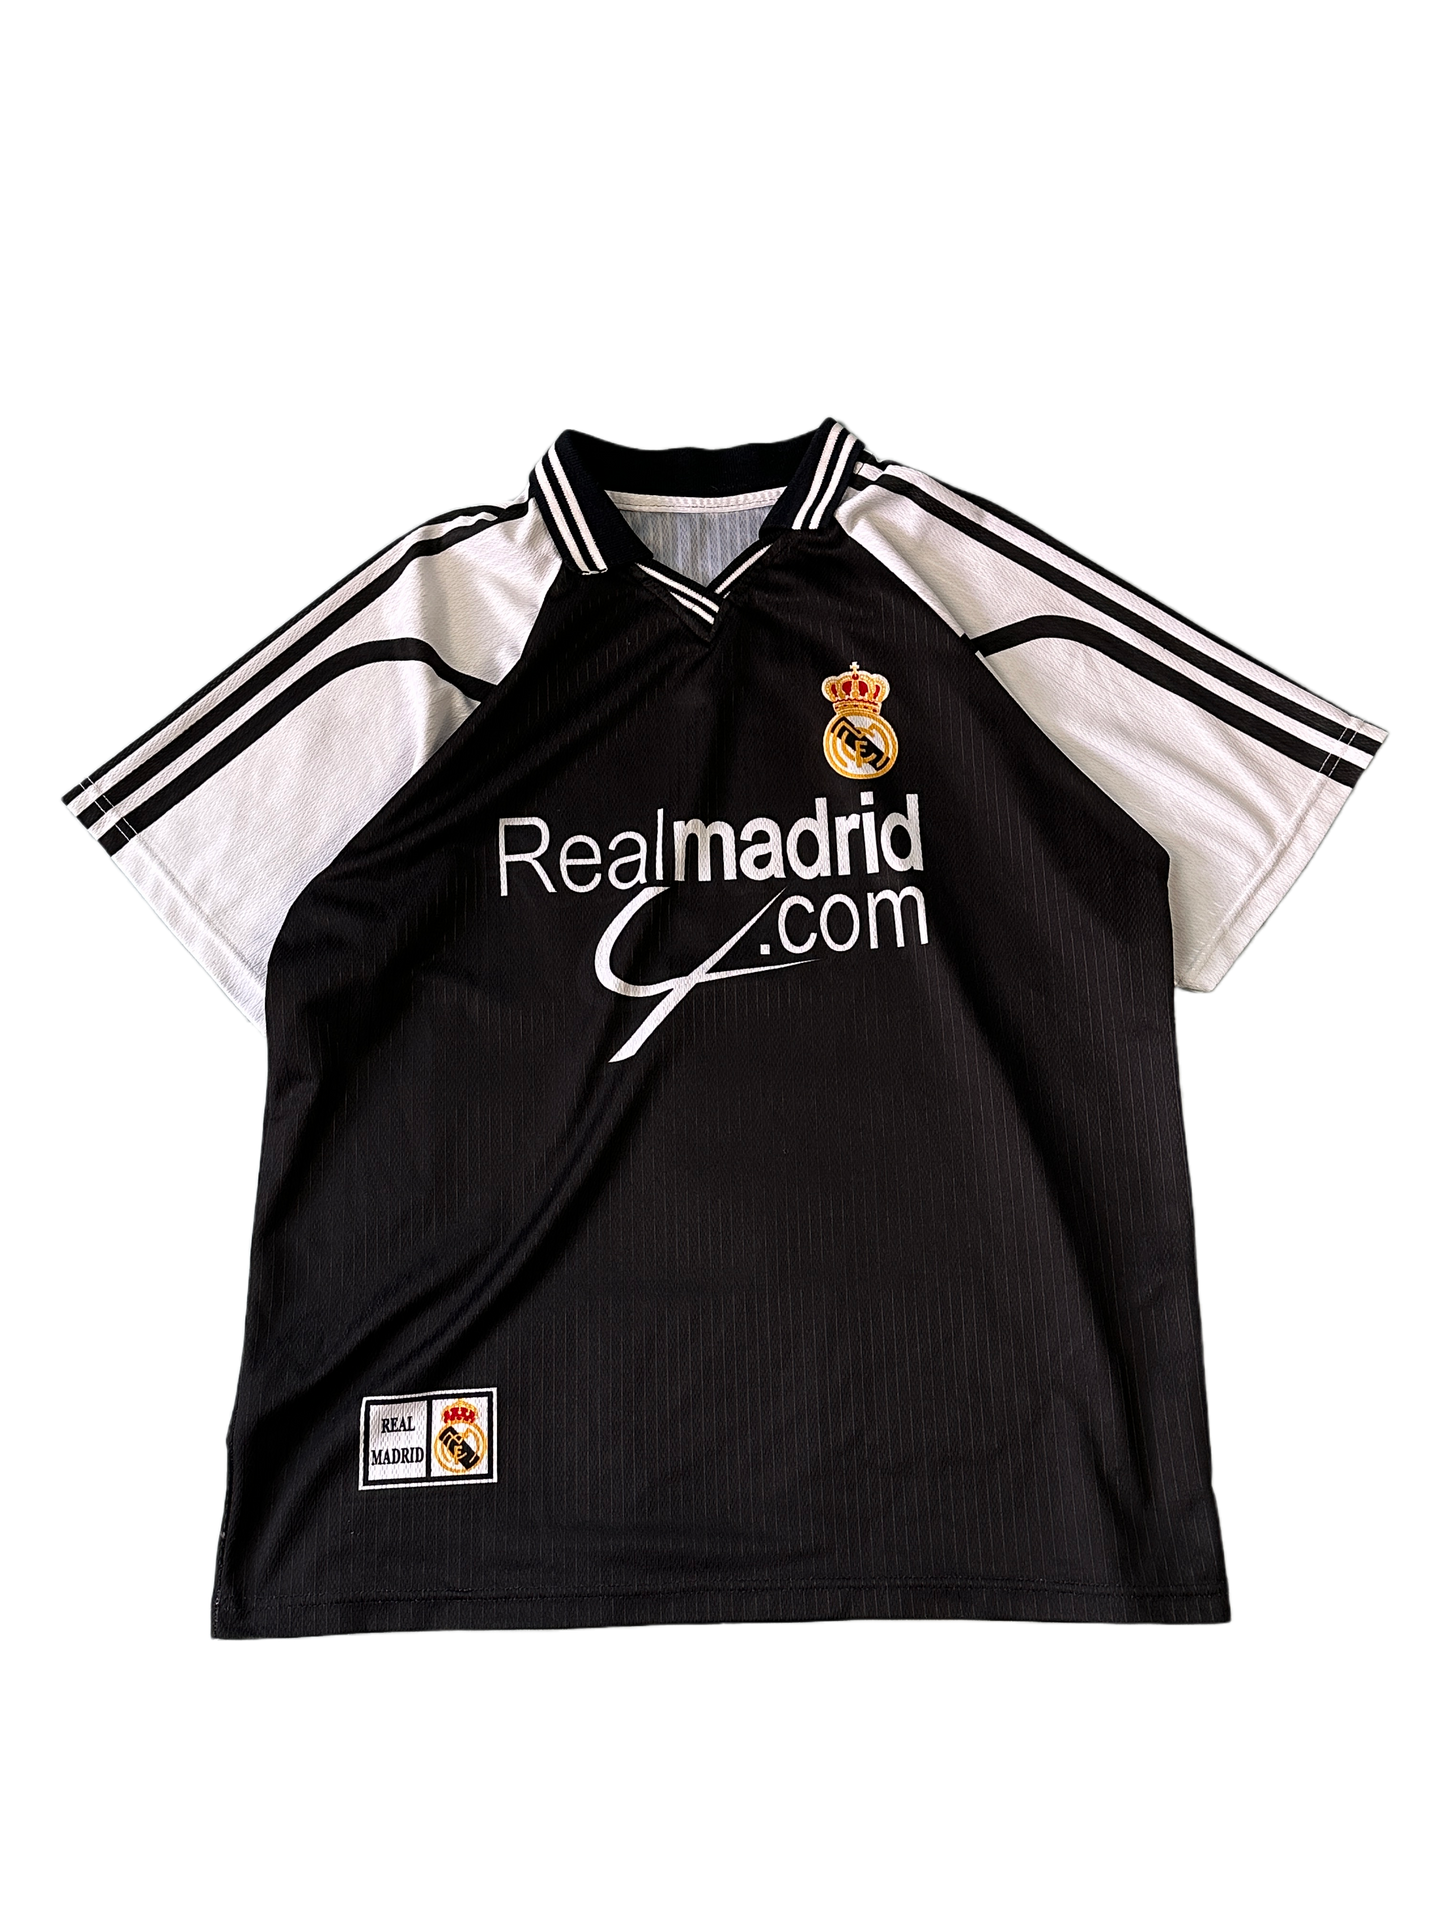 Jersey Real Madrid 2001 Vintage - XL